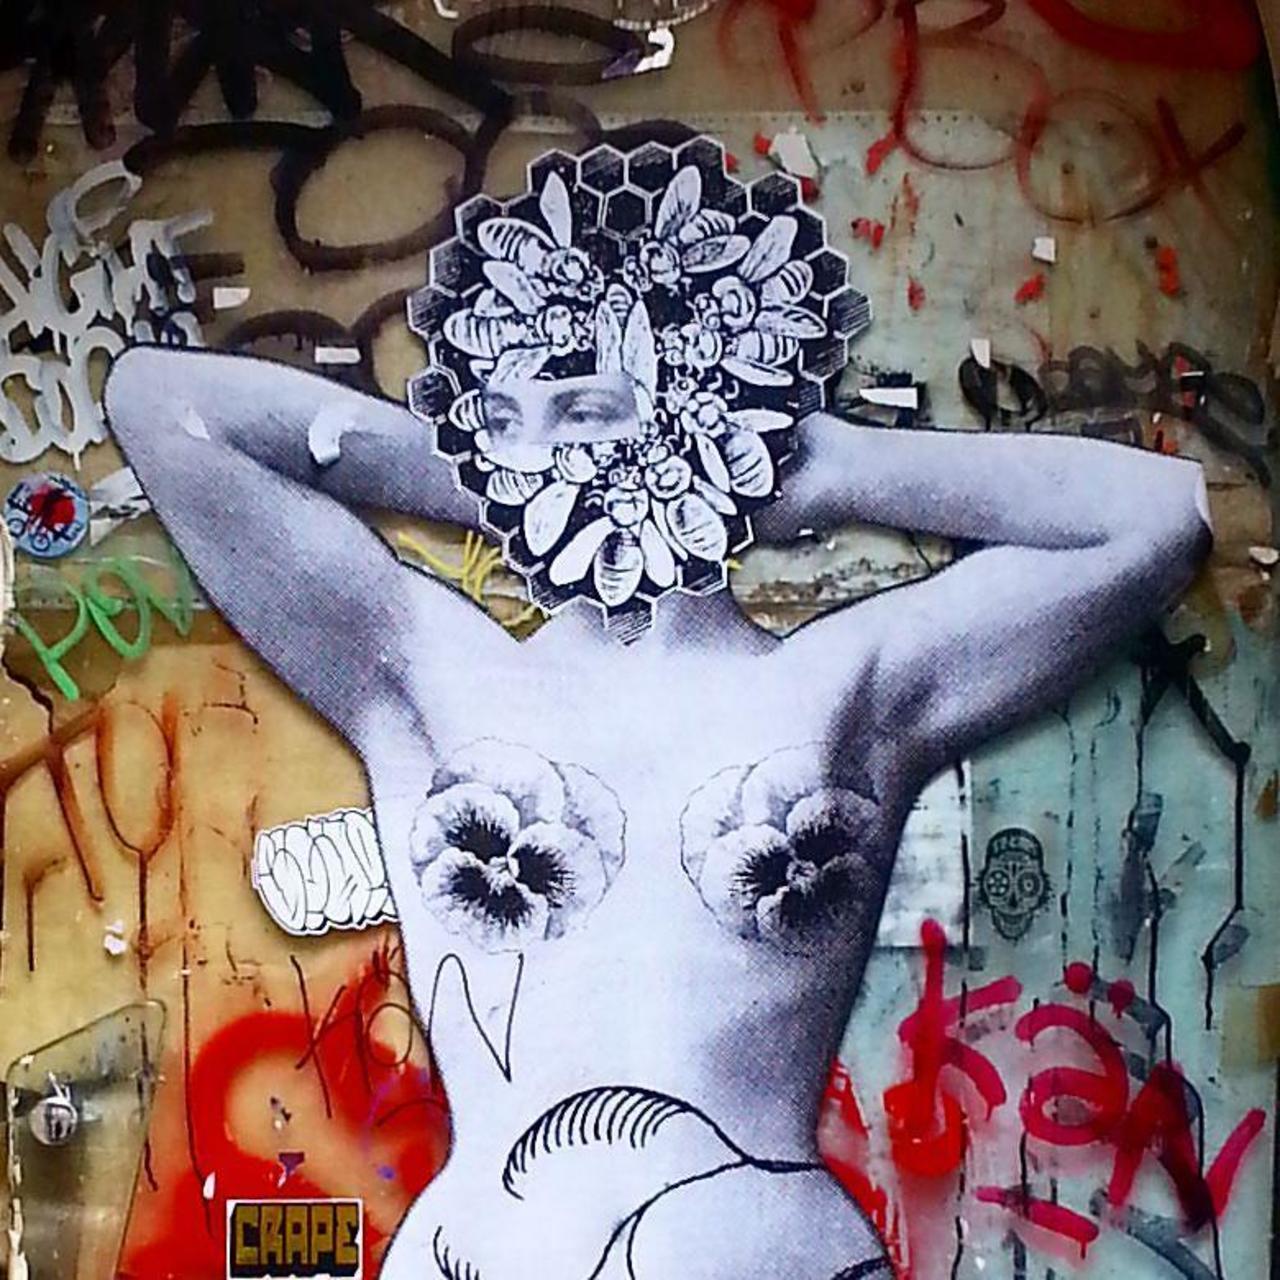 #Paris #graffiti photo by @fotoflaneuse http://ift.tt/1LDgPeM #StreetArt http://t.co/0y1tlnRSNc